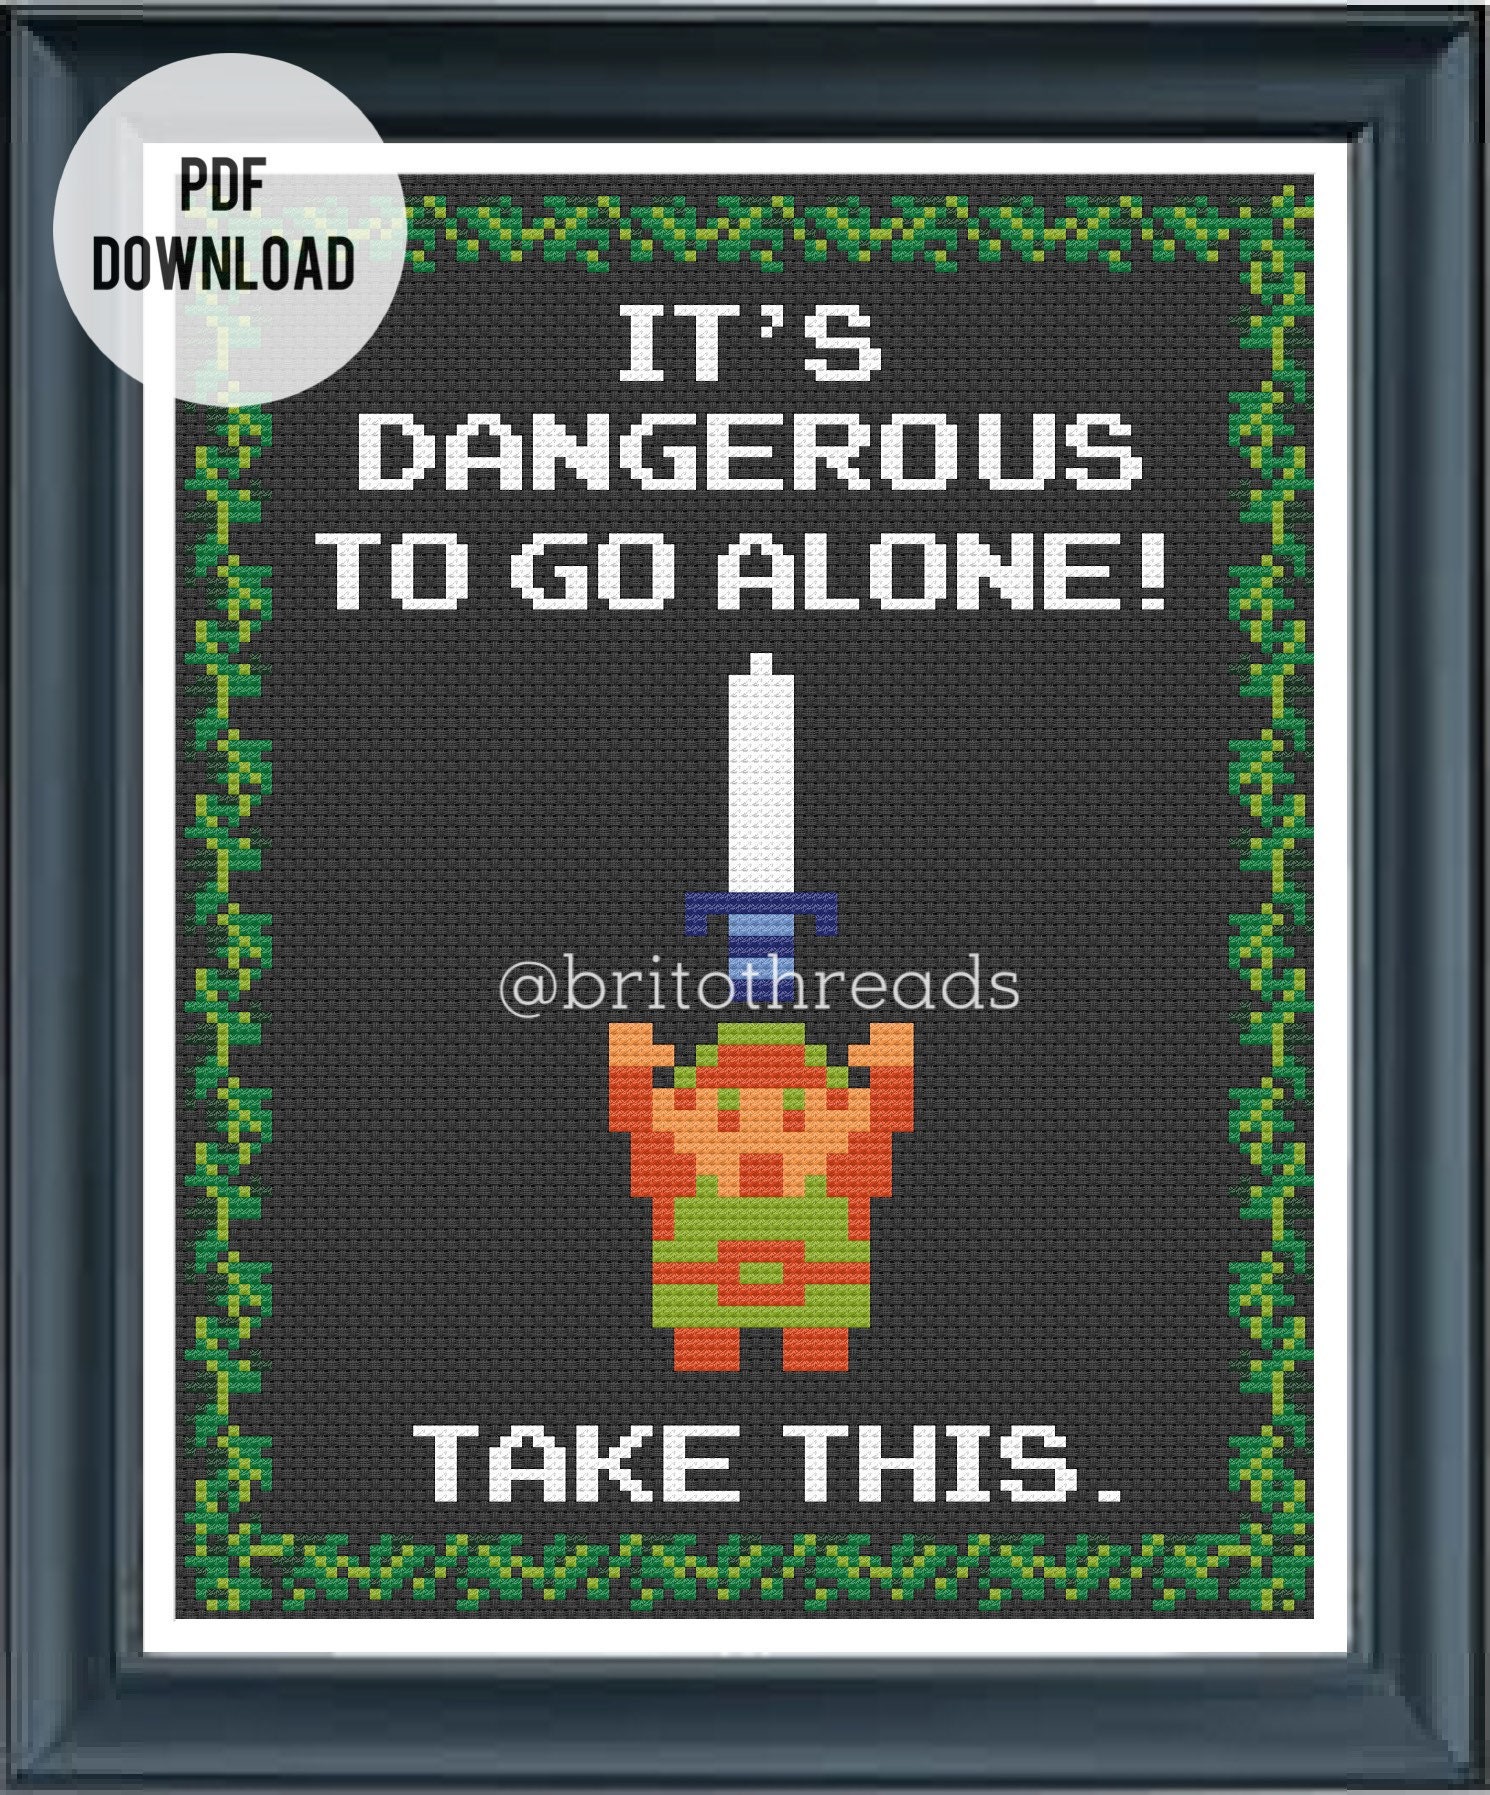 It's Dangerous To Go Alone, Take These Zelda Merch Deals! - Bell of Lost  Souls